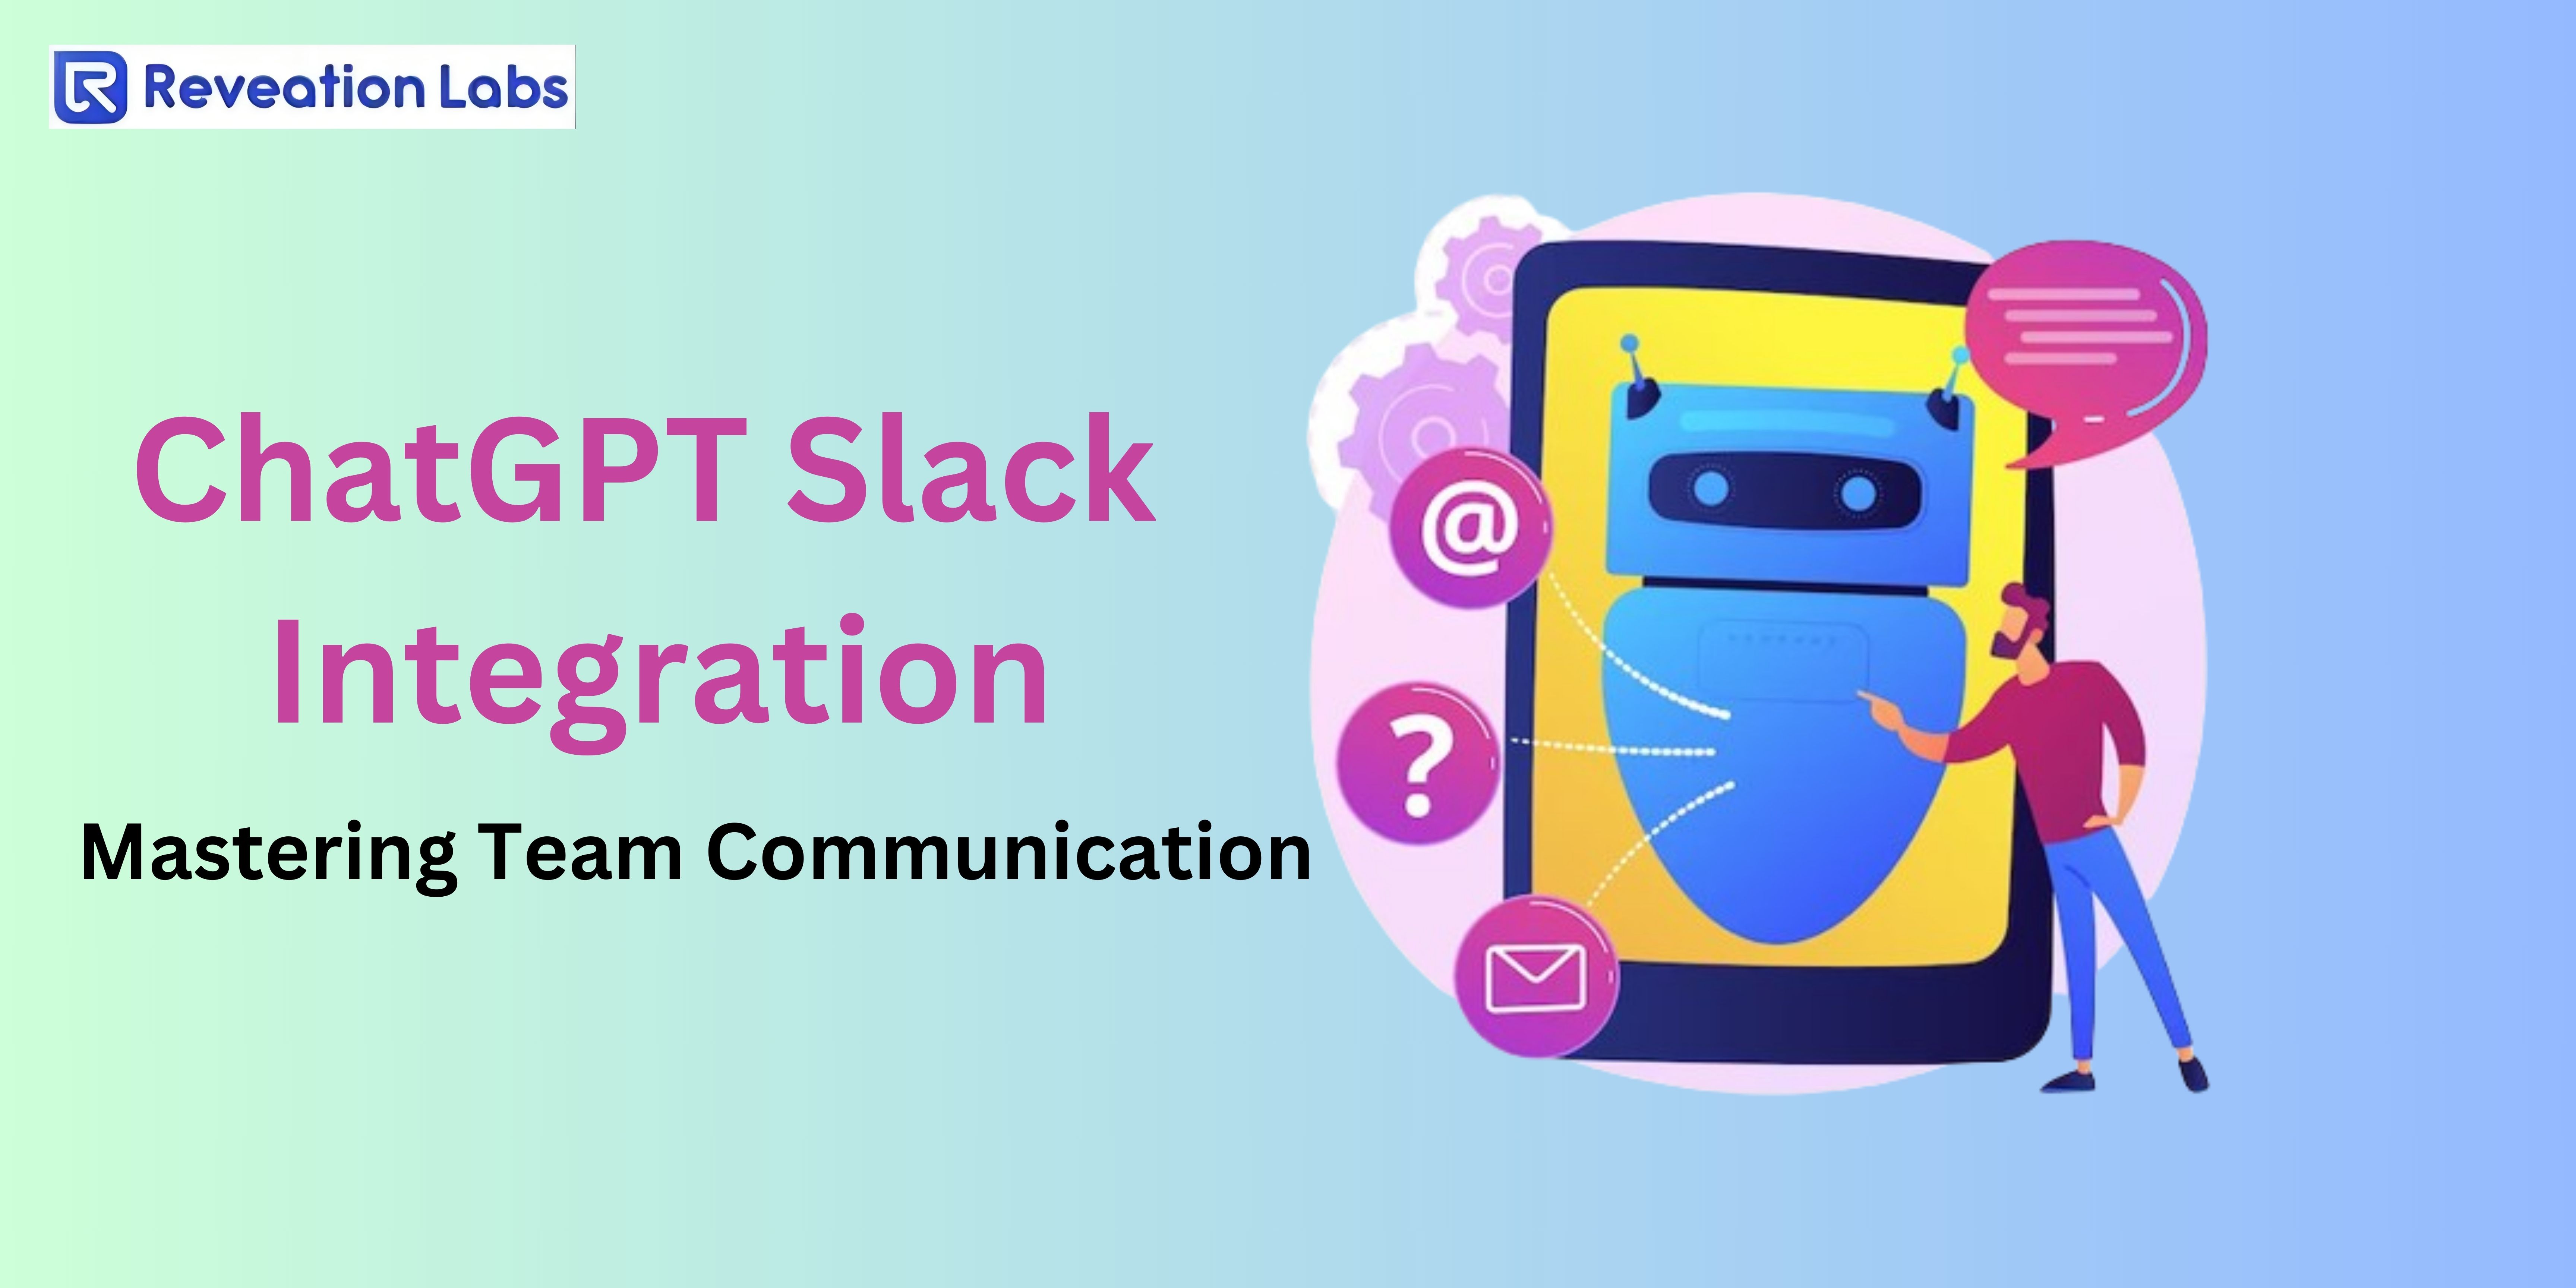 ChatGPT Slack Integration: Mastering Team Communication